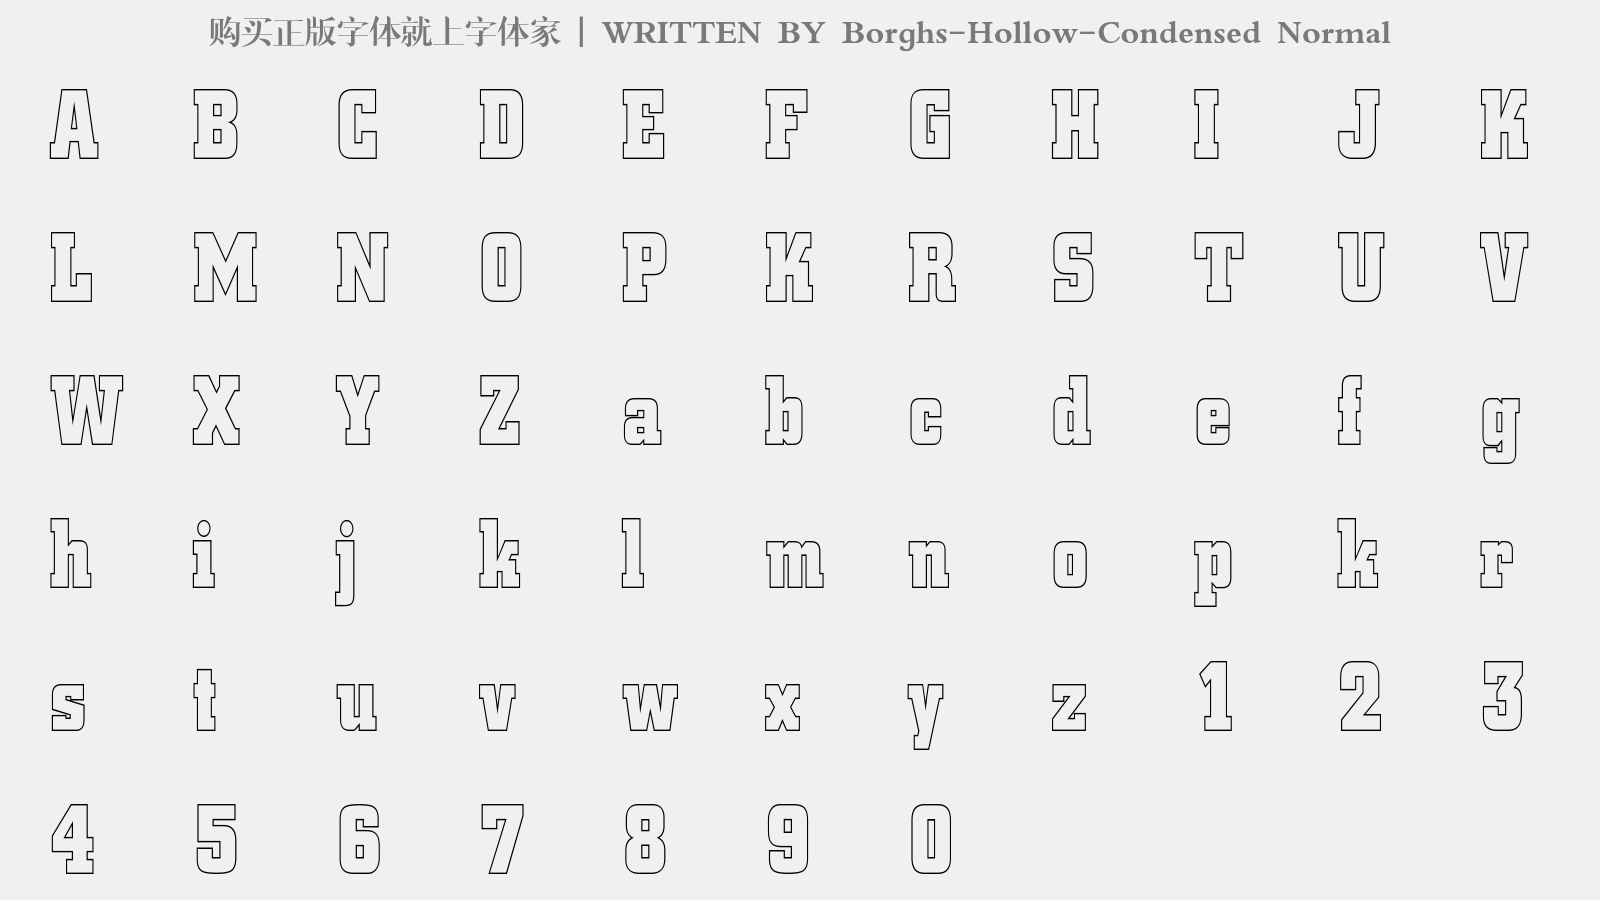 Borghs-Hollow-Condensed Normal - 大写字母/小写字母/数字